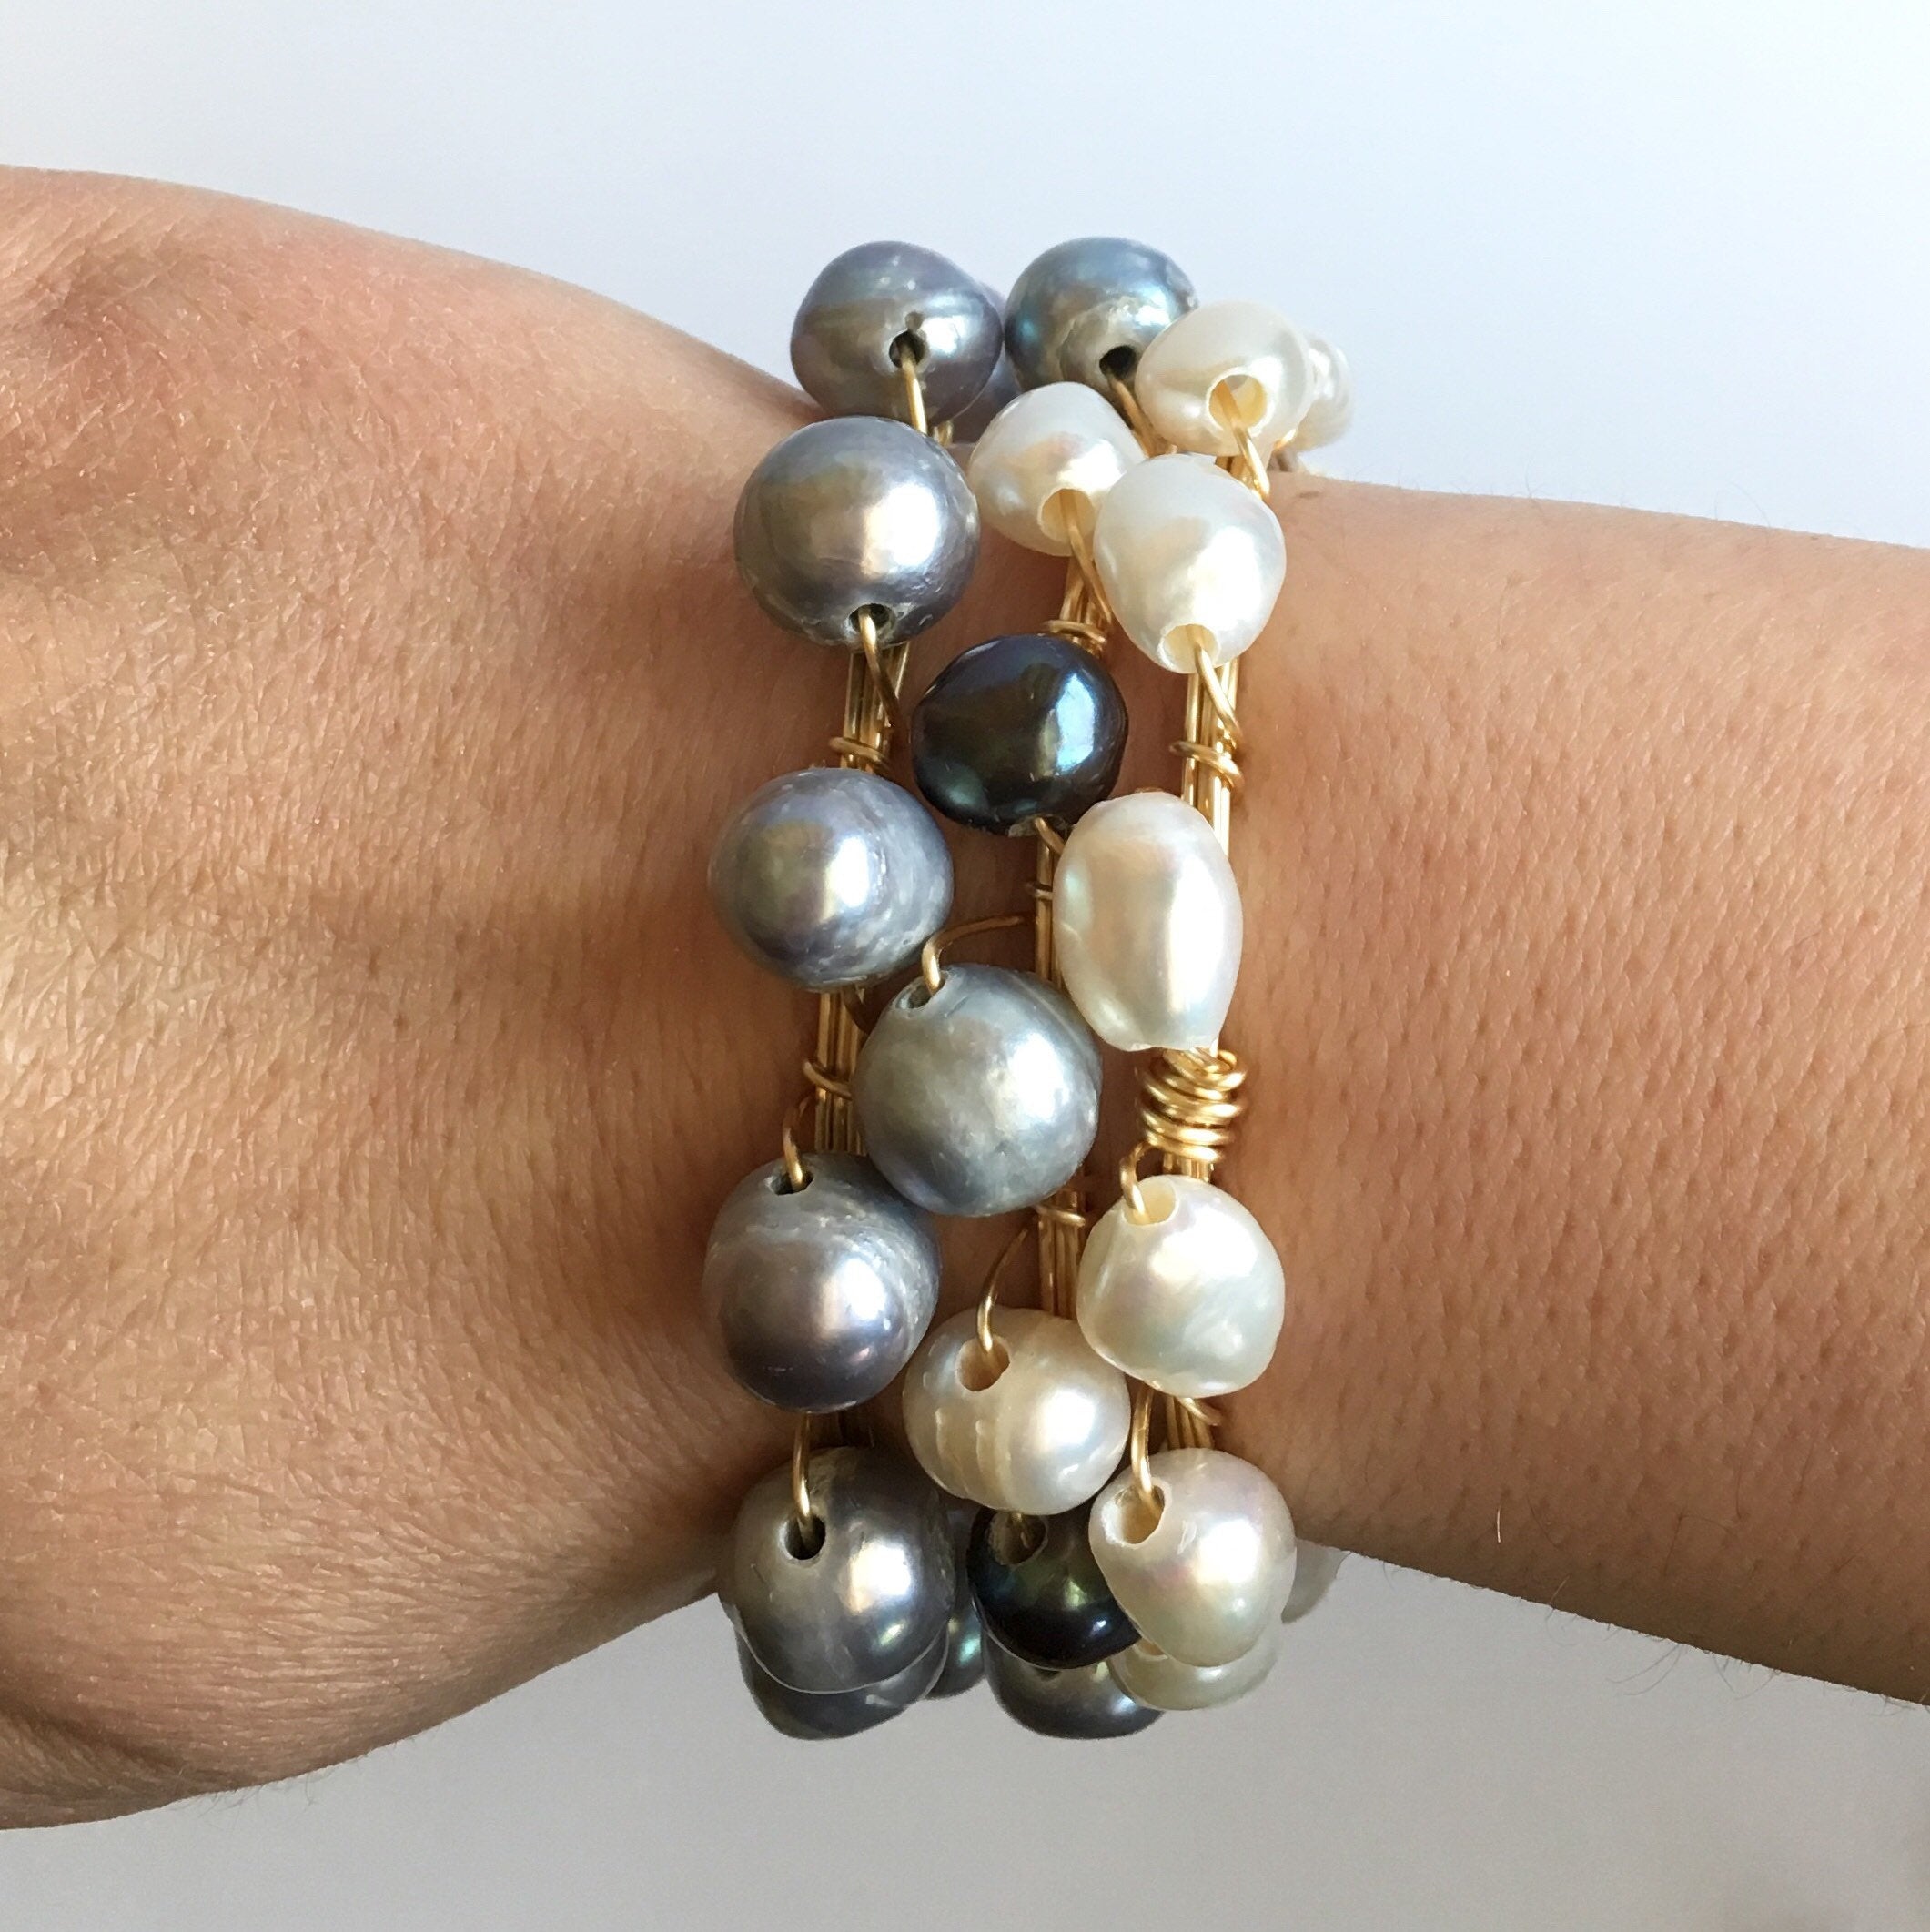 Three Pearl and Gold Bangle Bracelet on women's wrist.